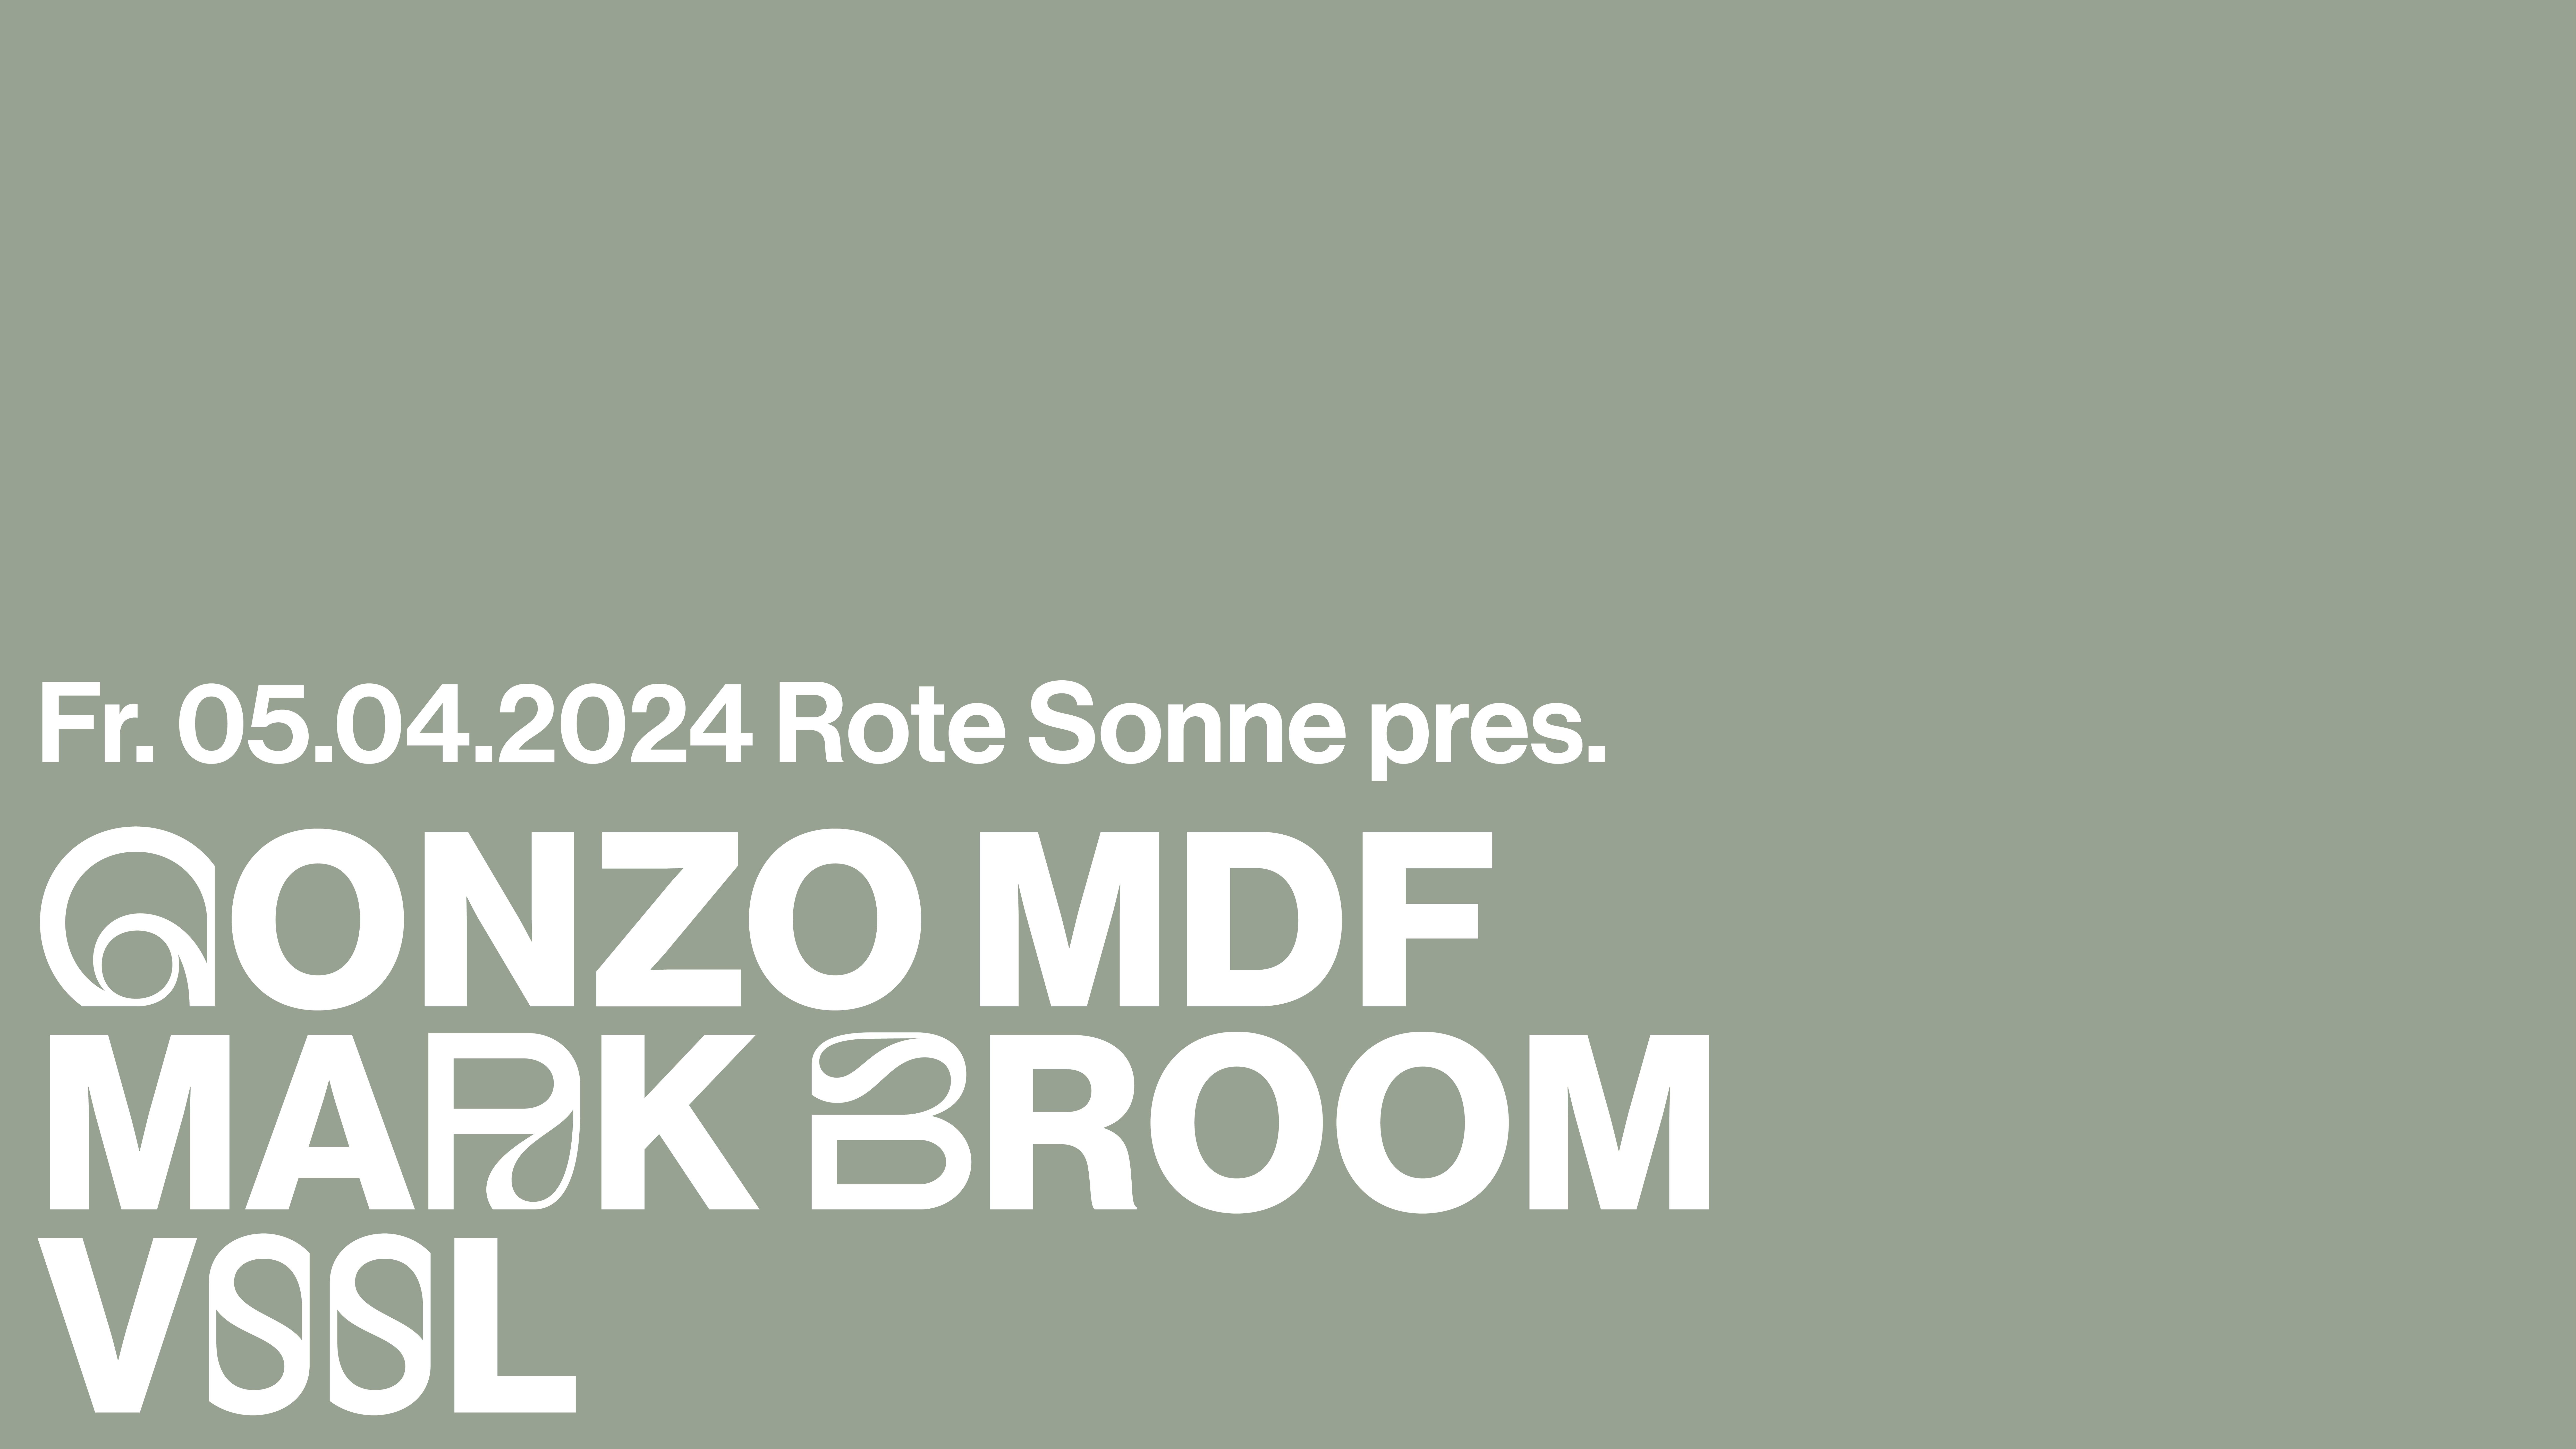 Rote Sonne pres. gonzo MDF, Mark Broom & VSSL - フライヤー表